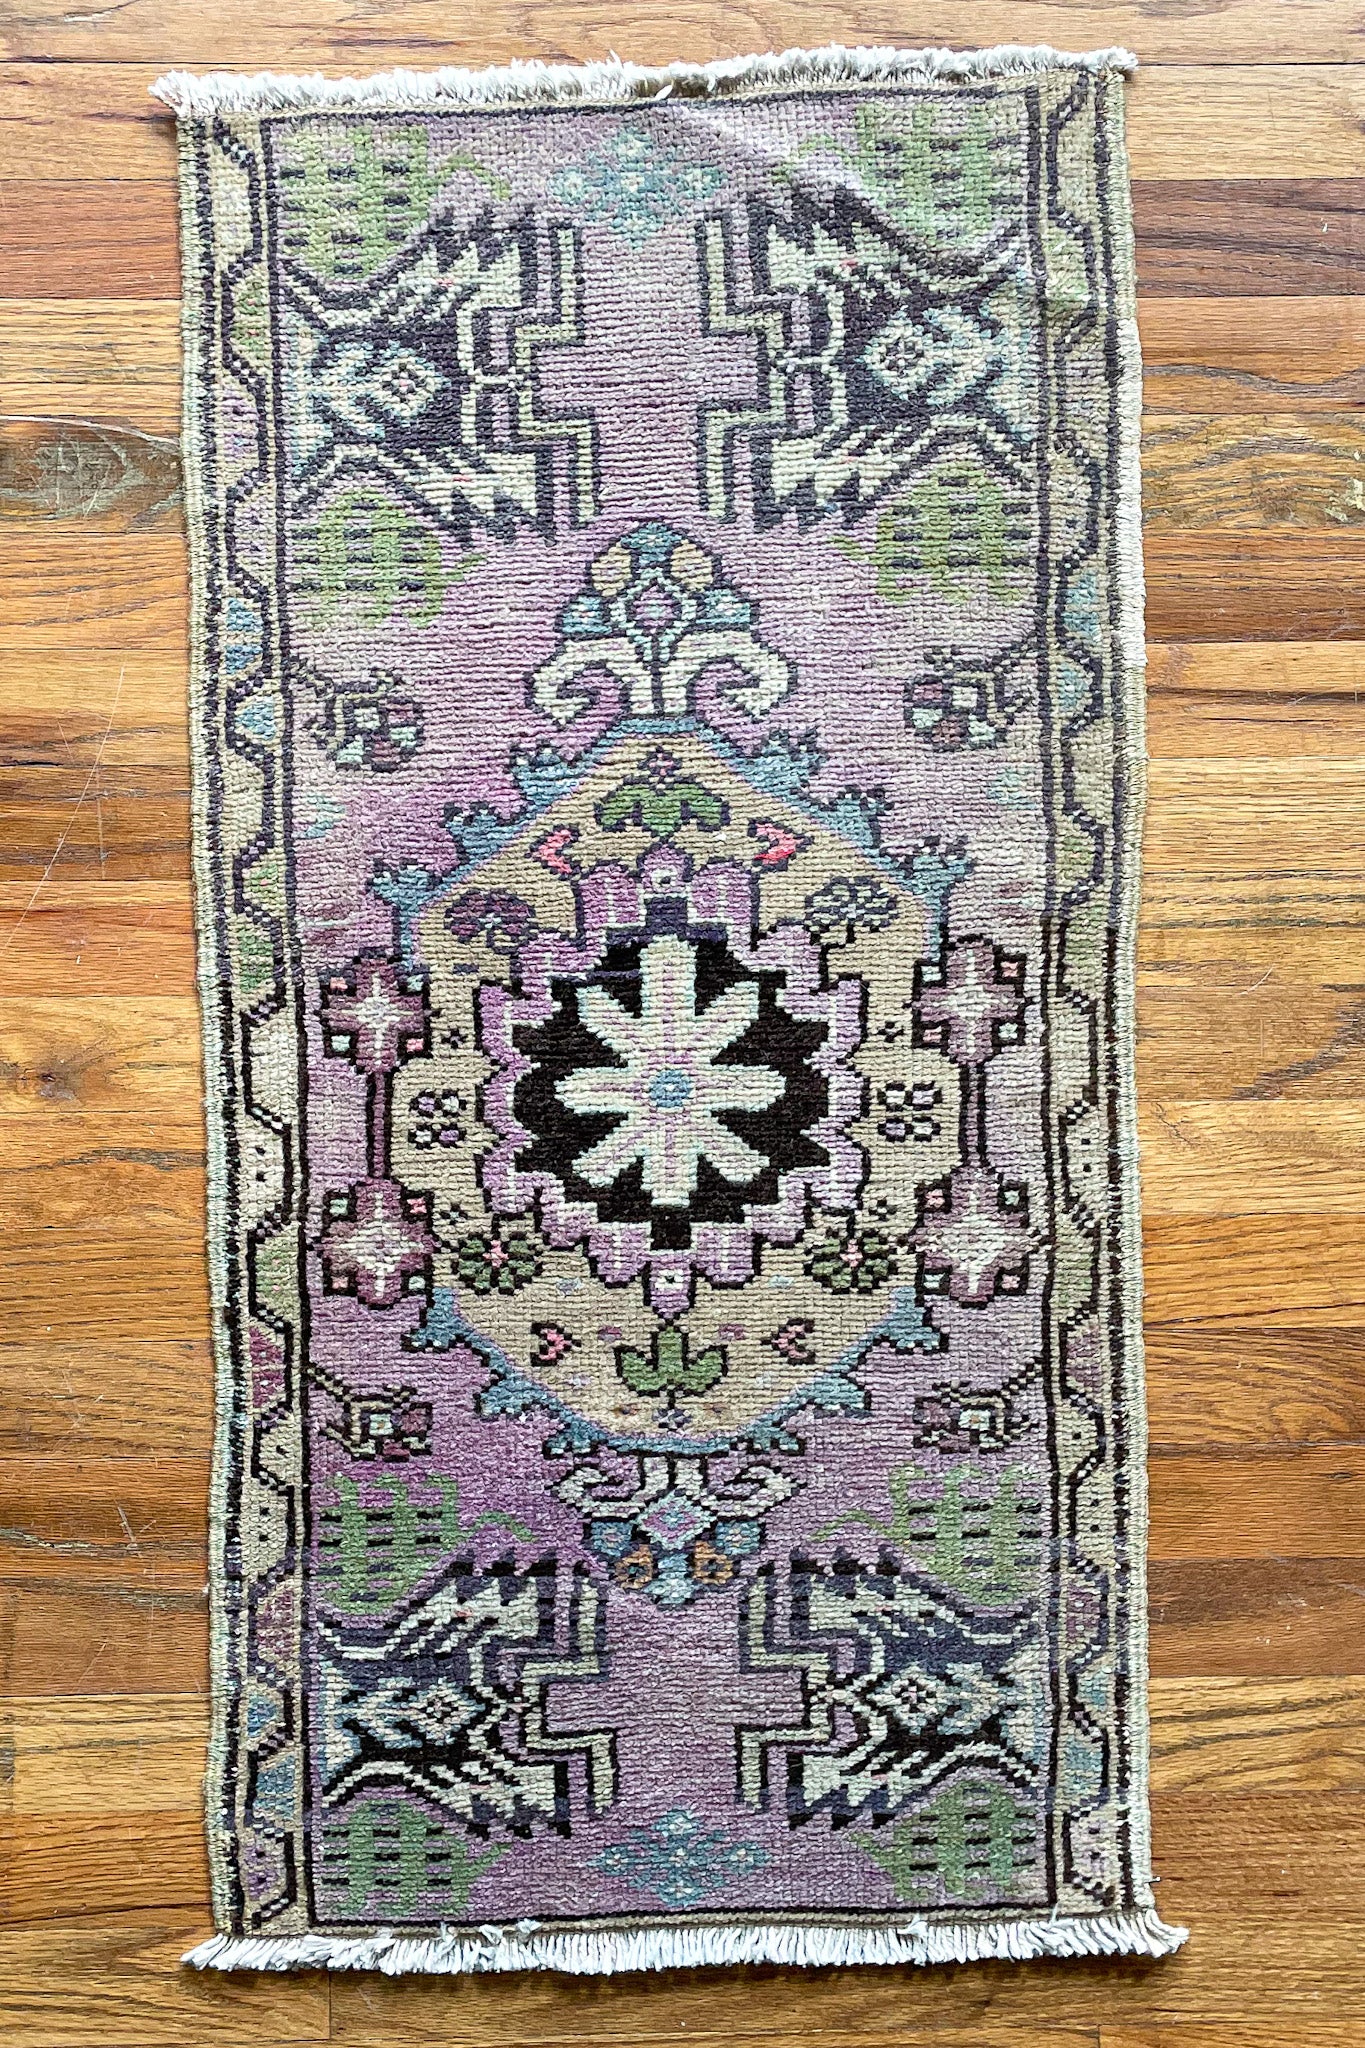 Woven vintage Turkish mini rug in purple, green, and black.